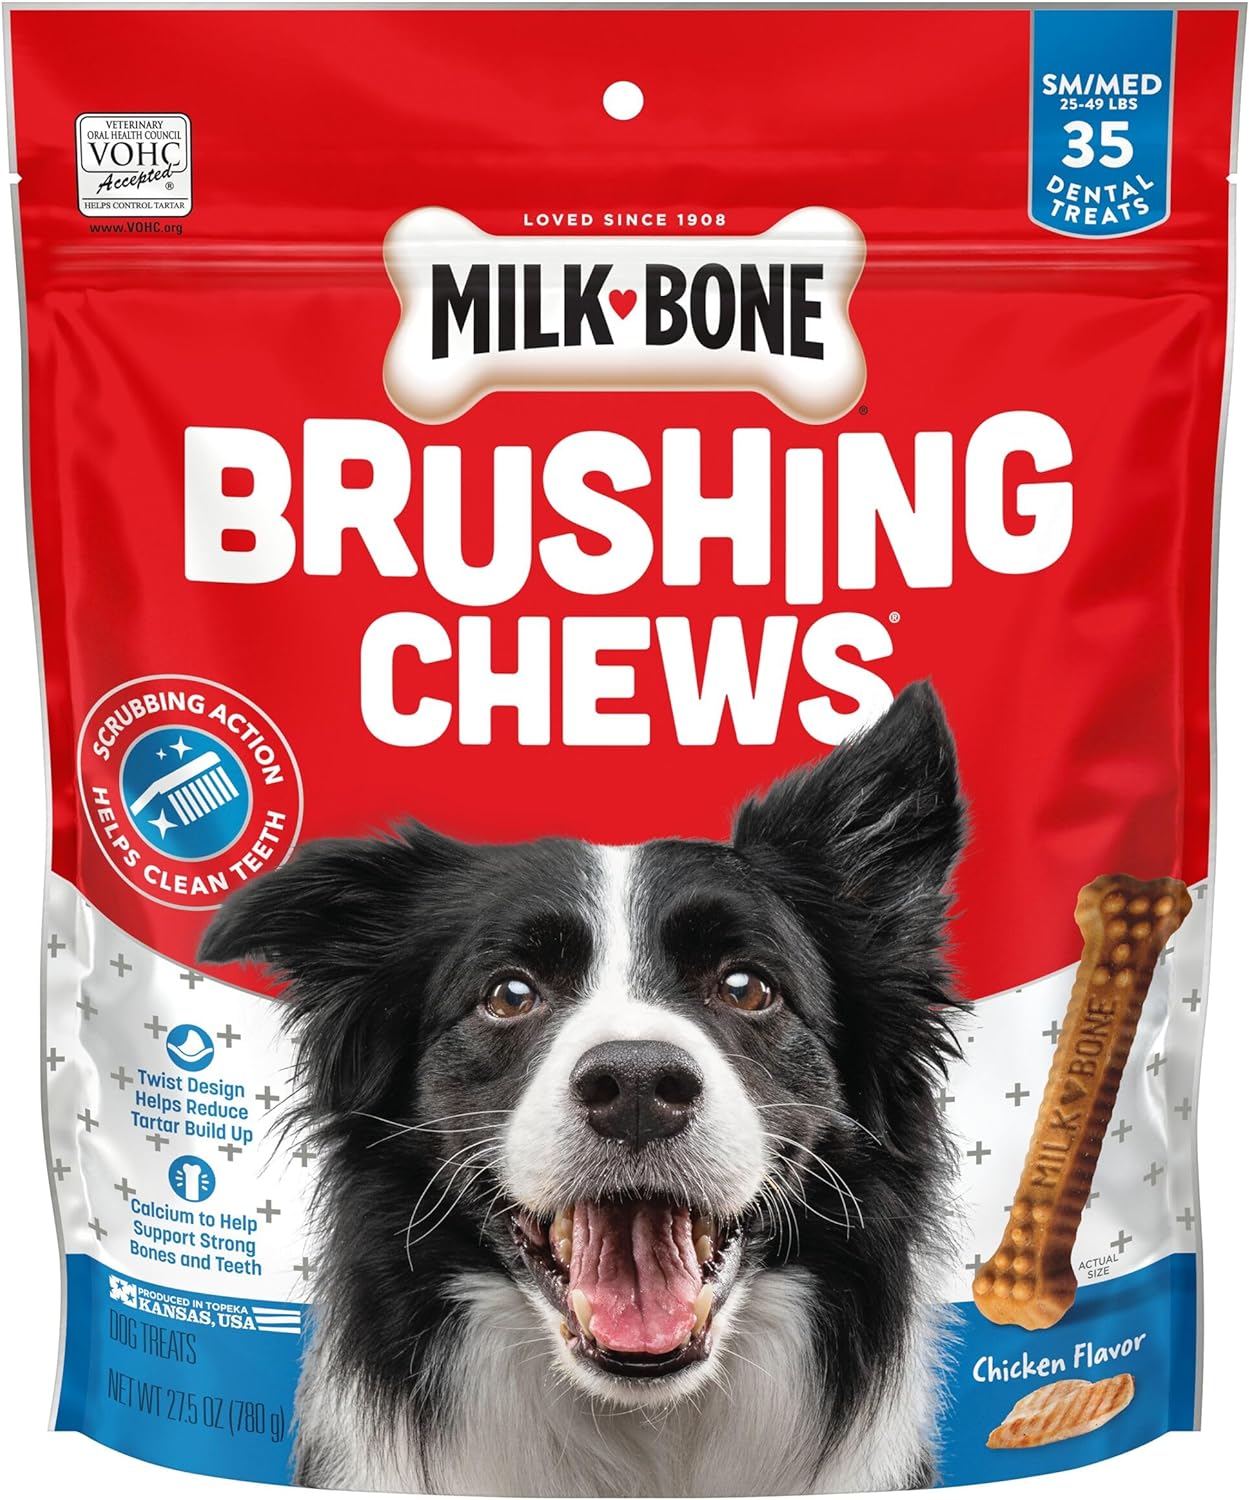 Milk-Bone Original Brushing Chews, 35 Small/Medium Daily Dental Dog Treats Scrubbing Action Helps Clean Teeth